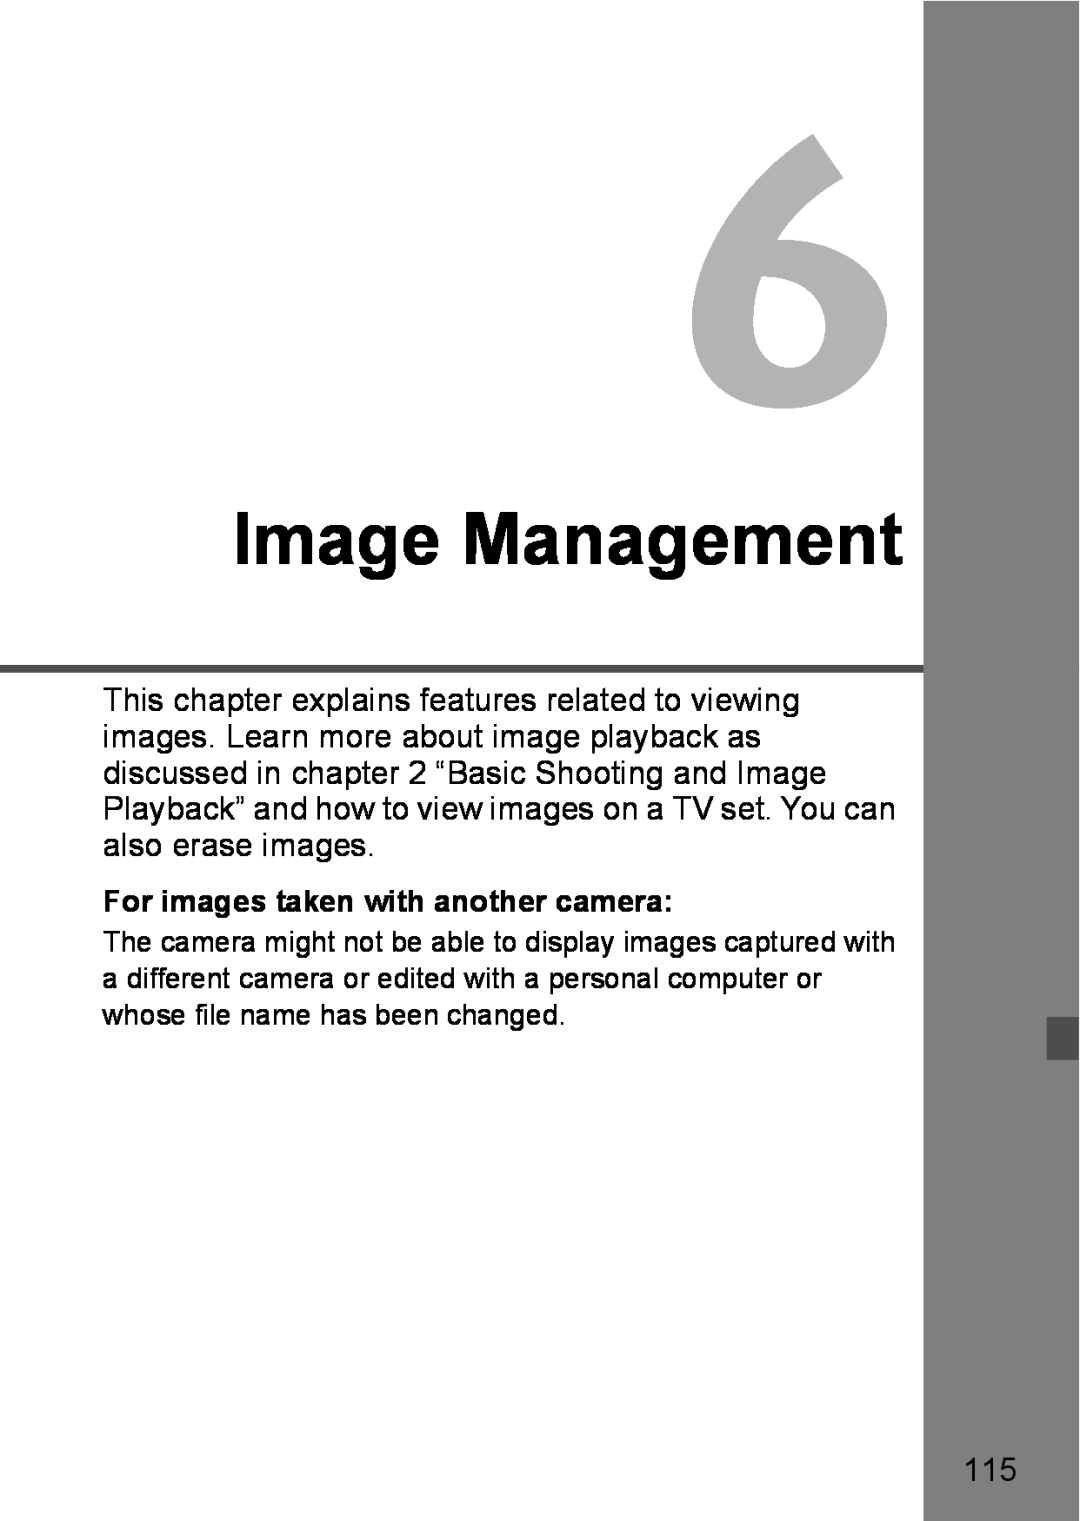 Canon EOS DIGITAL REBEL XTI instruction manual Image Management 